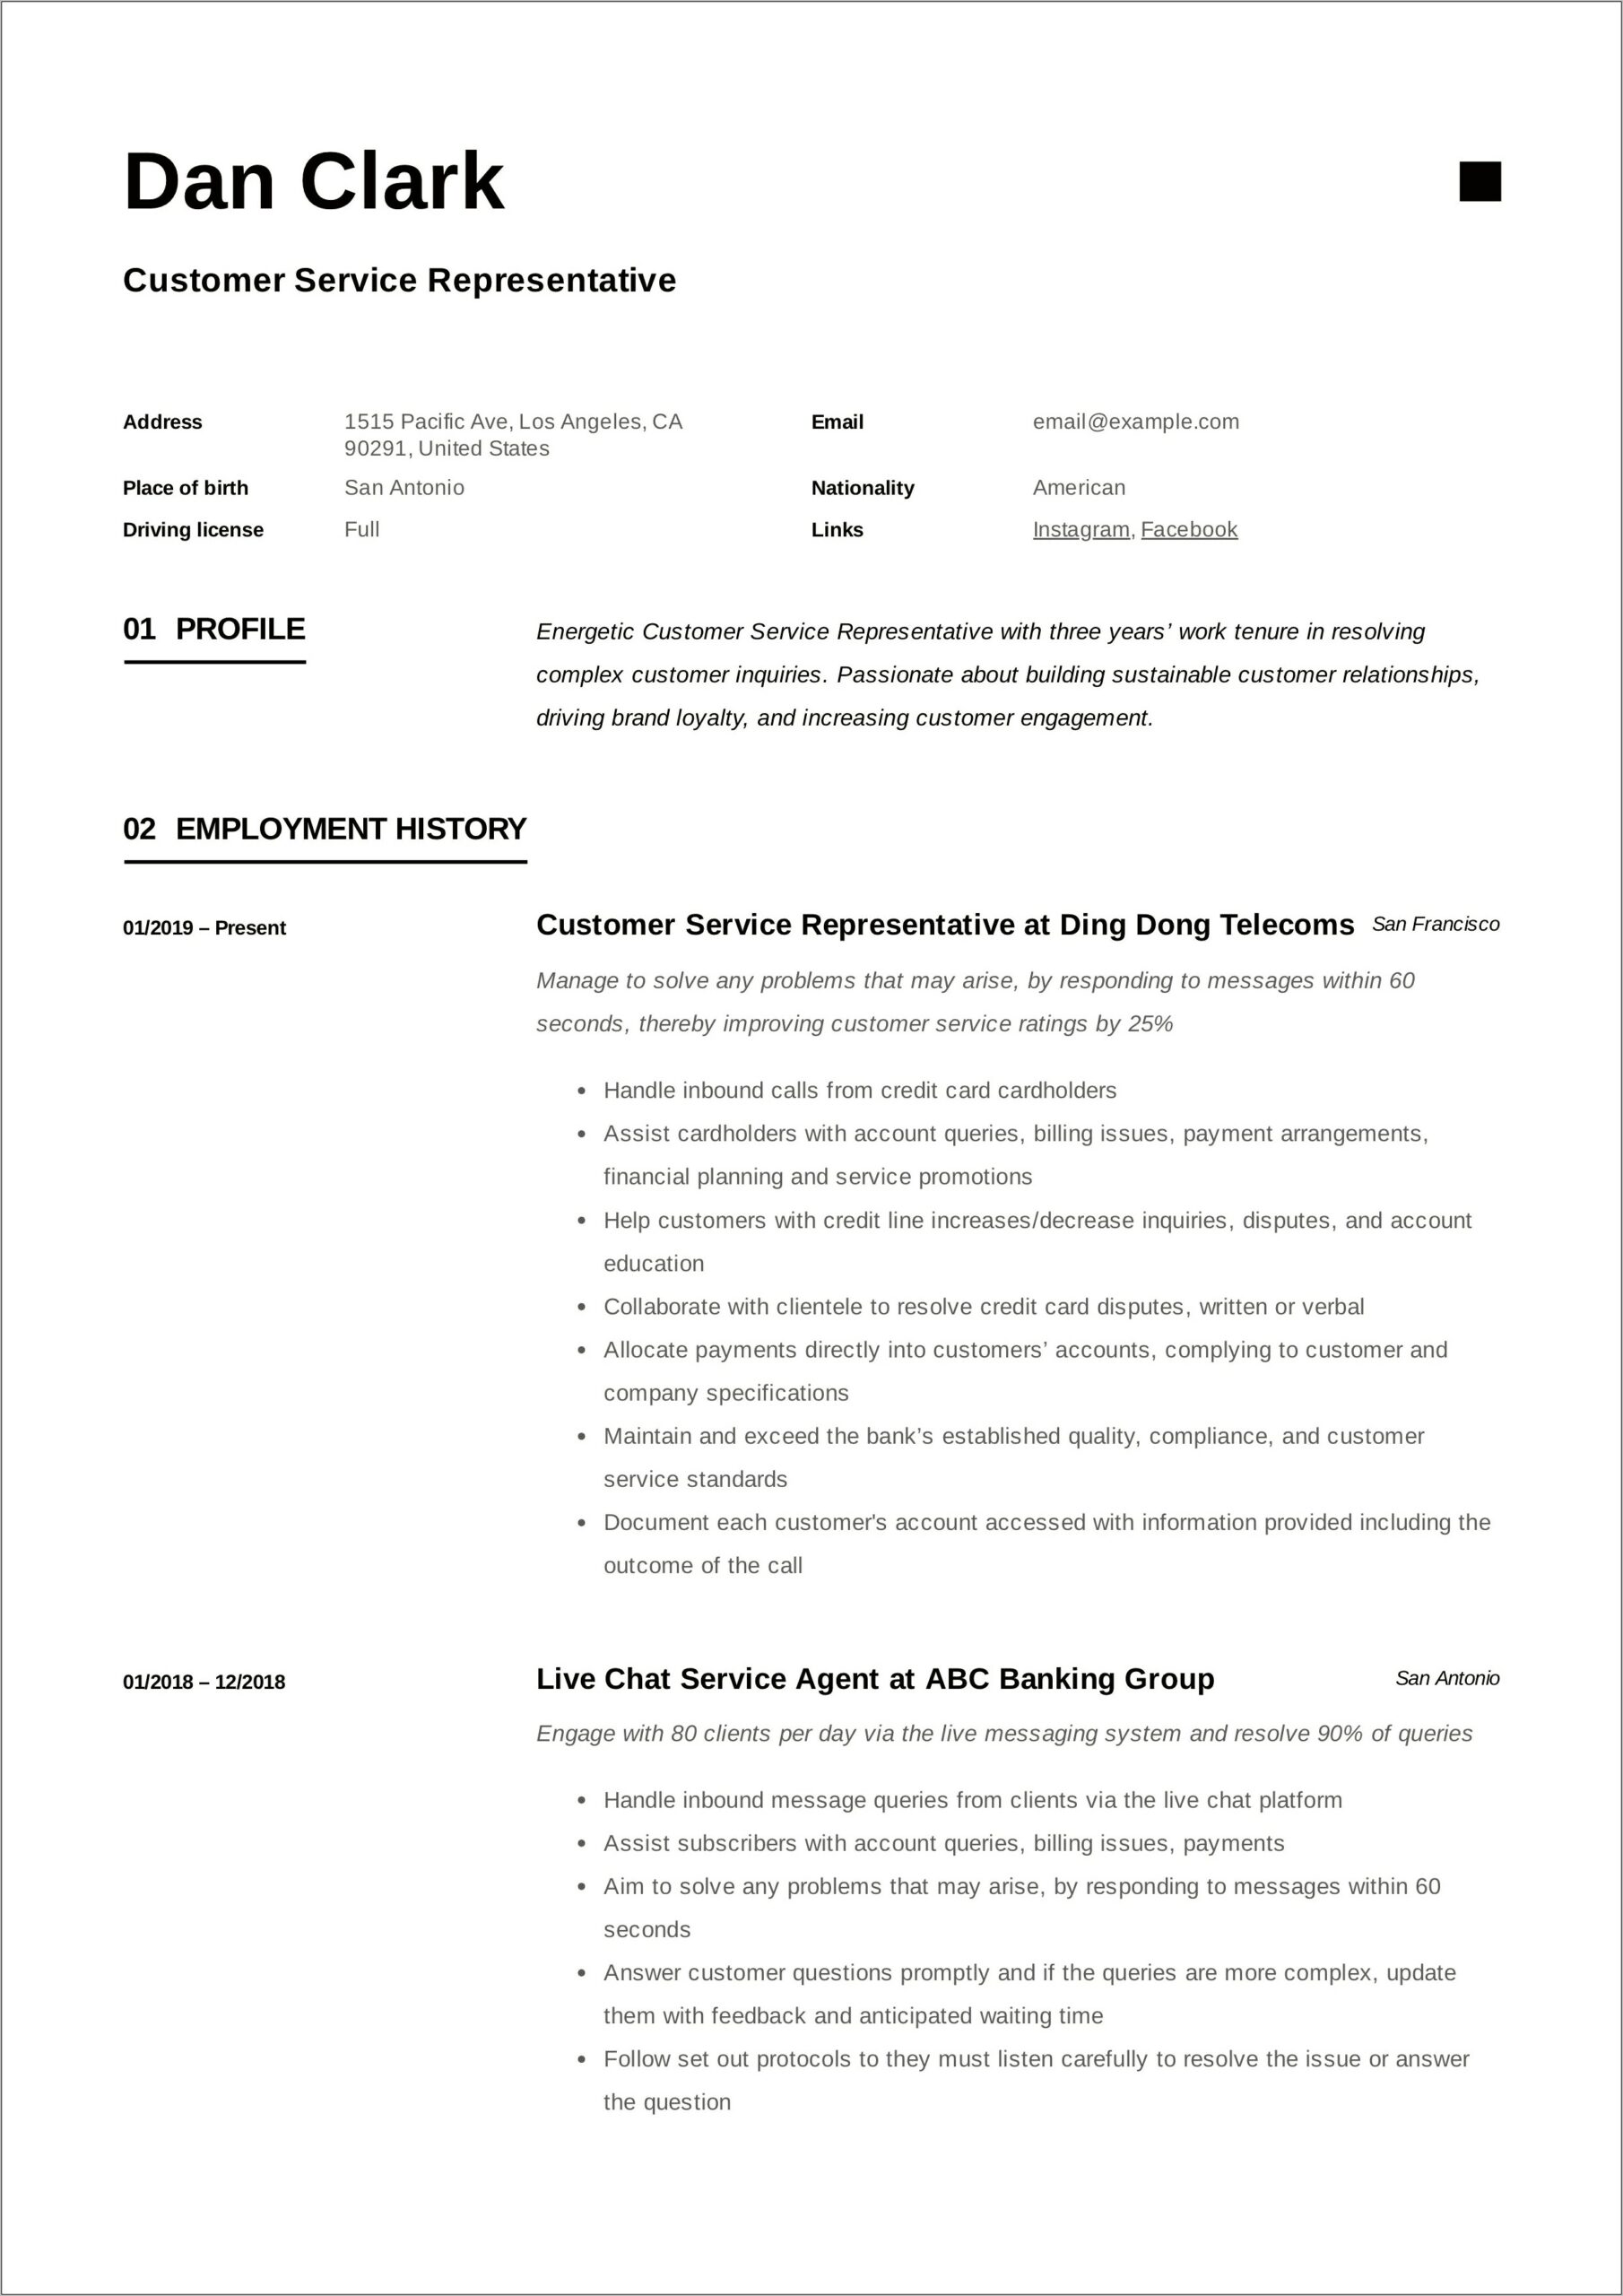 Resume Objective Statement For Customer Service Representative